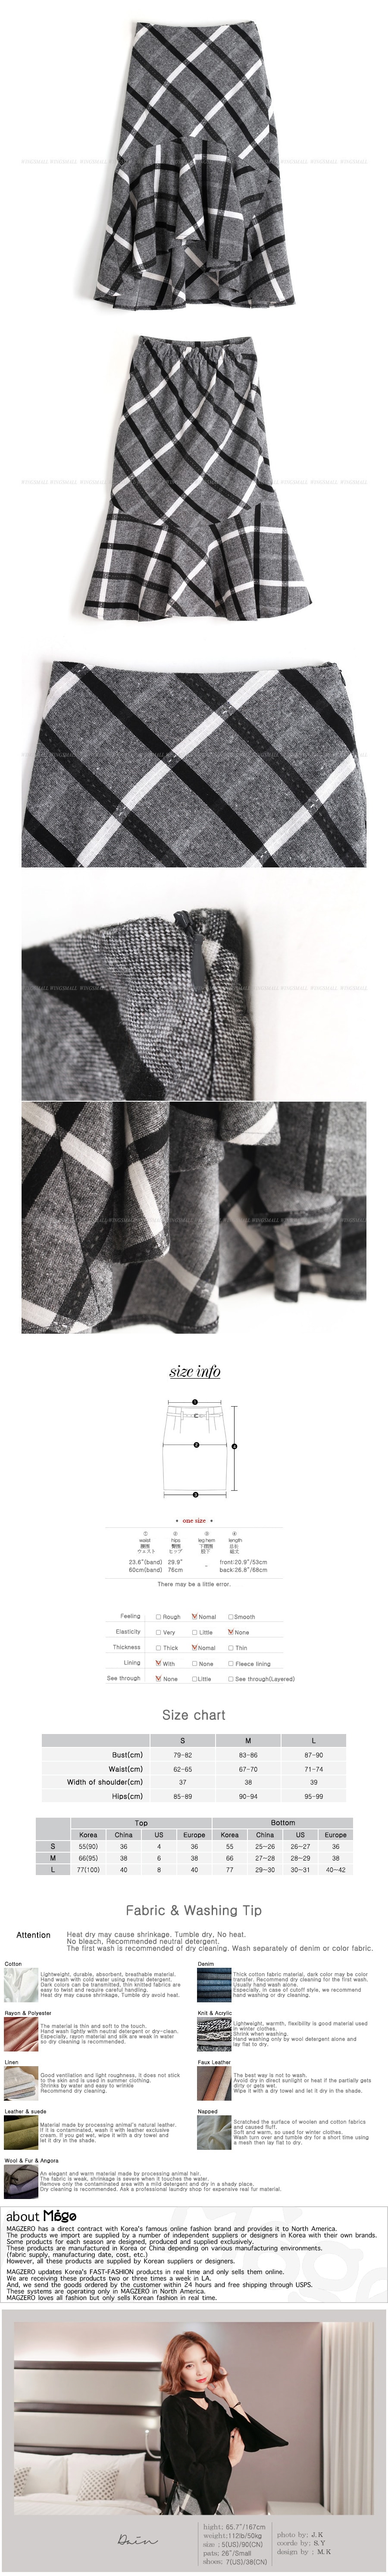 MAGZERO [限量销售] 格子图案铅笔中长裙 #灰色 均码(S-M)